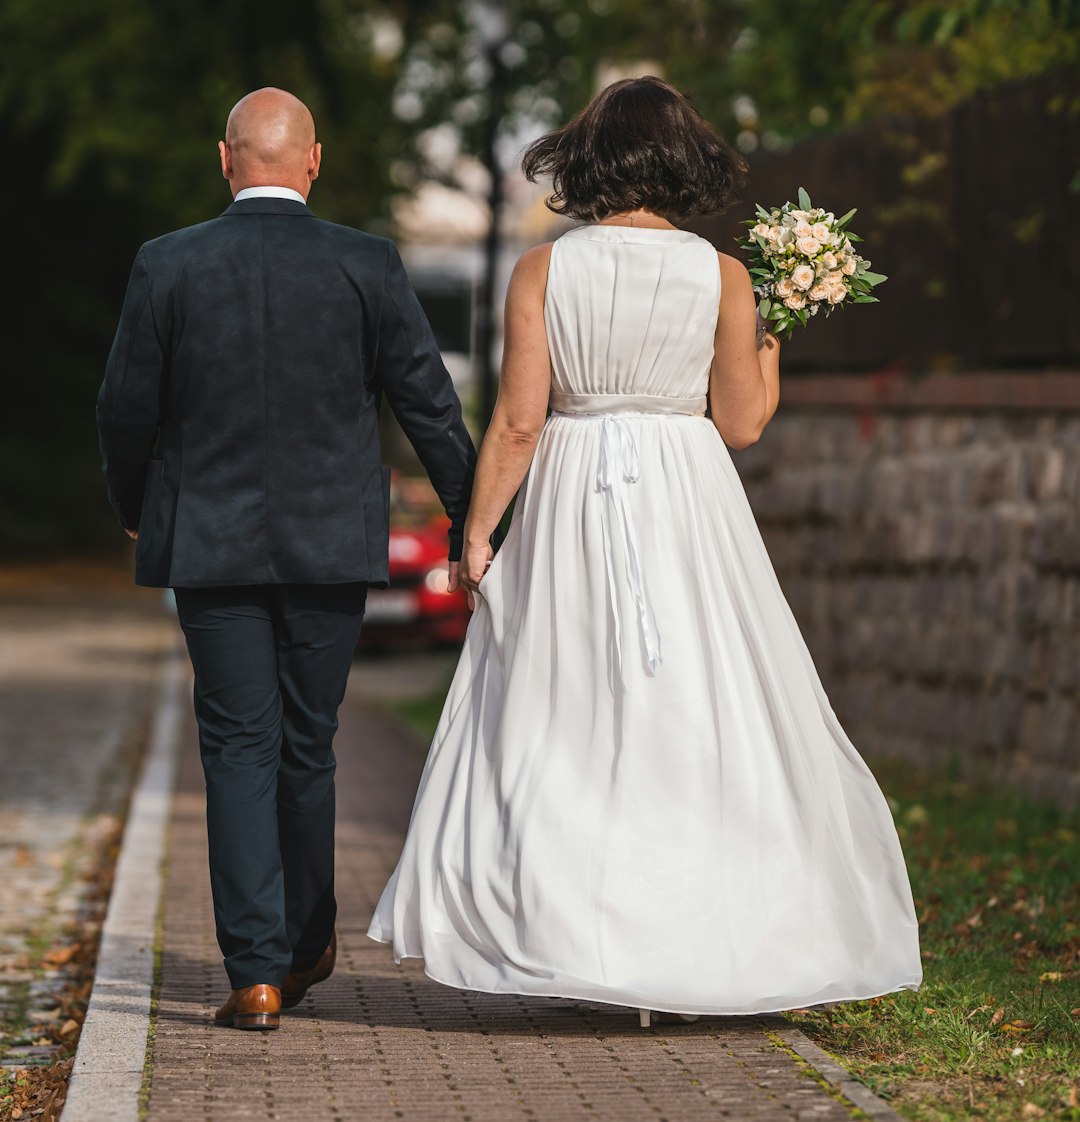 man in black suit and woman in white wedding dress walking on sidewalk during daytime